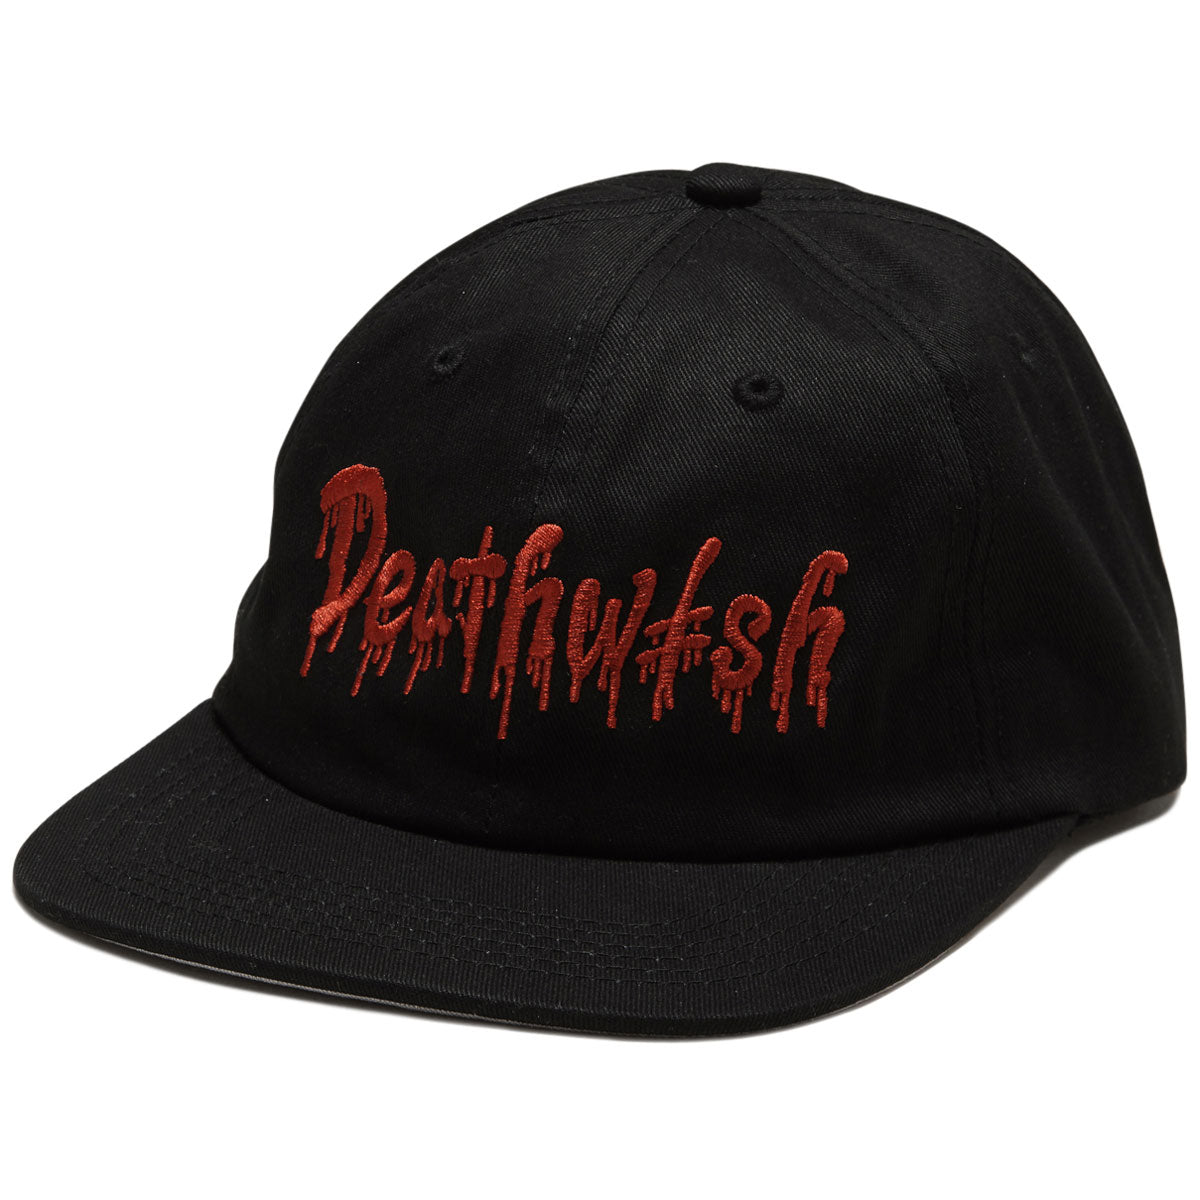 Deathwish Homicide Snapback Hat - Black